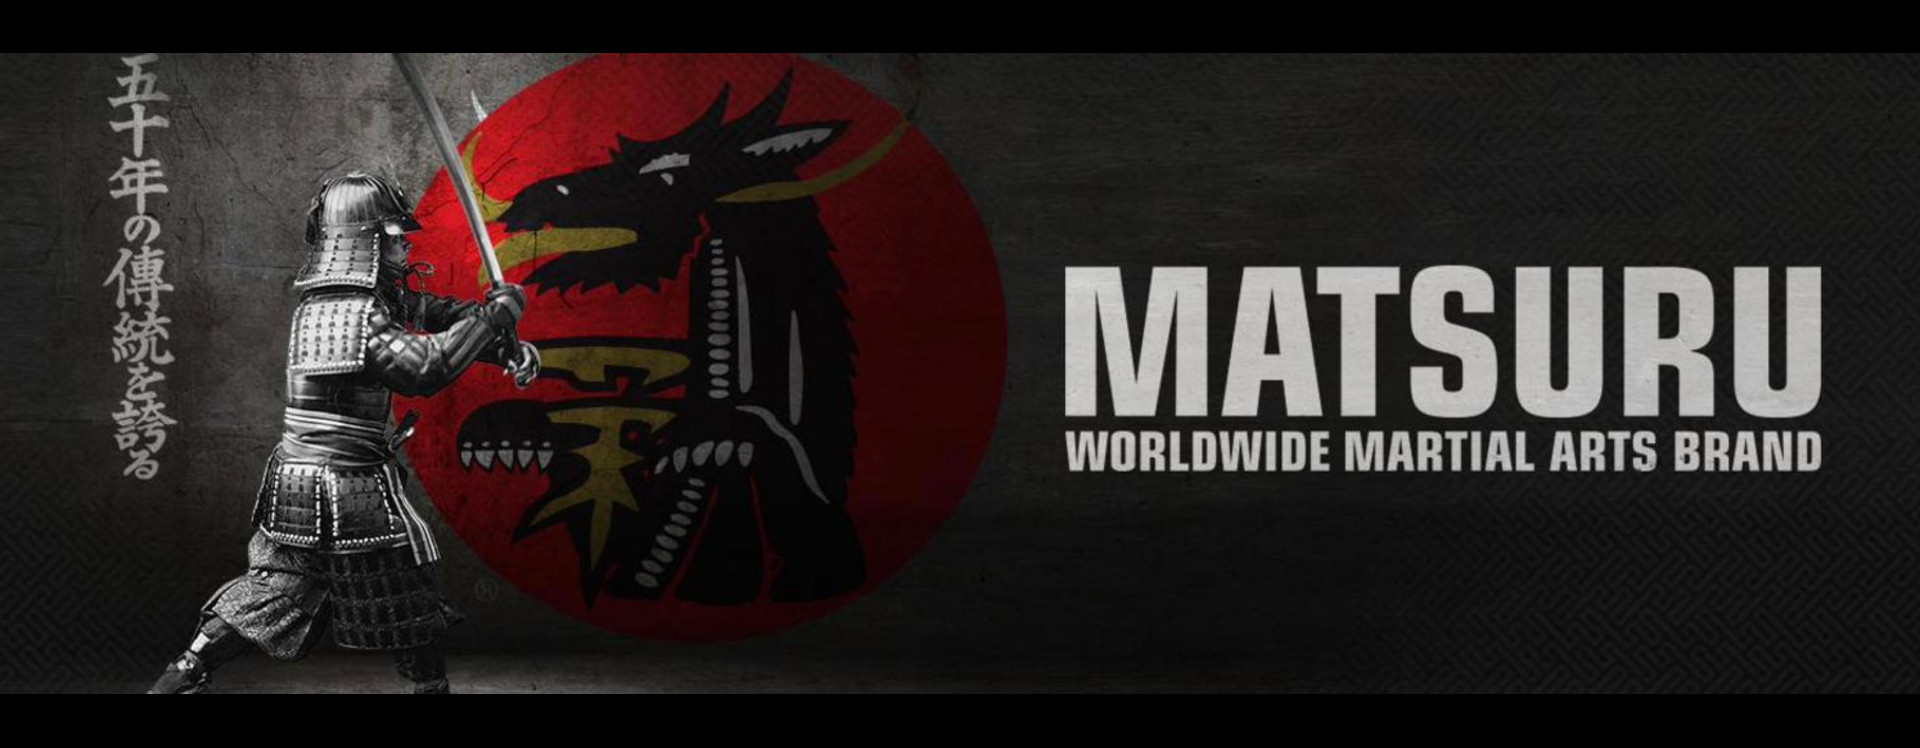 Matsuru - Worldwide Martial Arts Brand